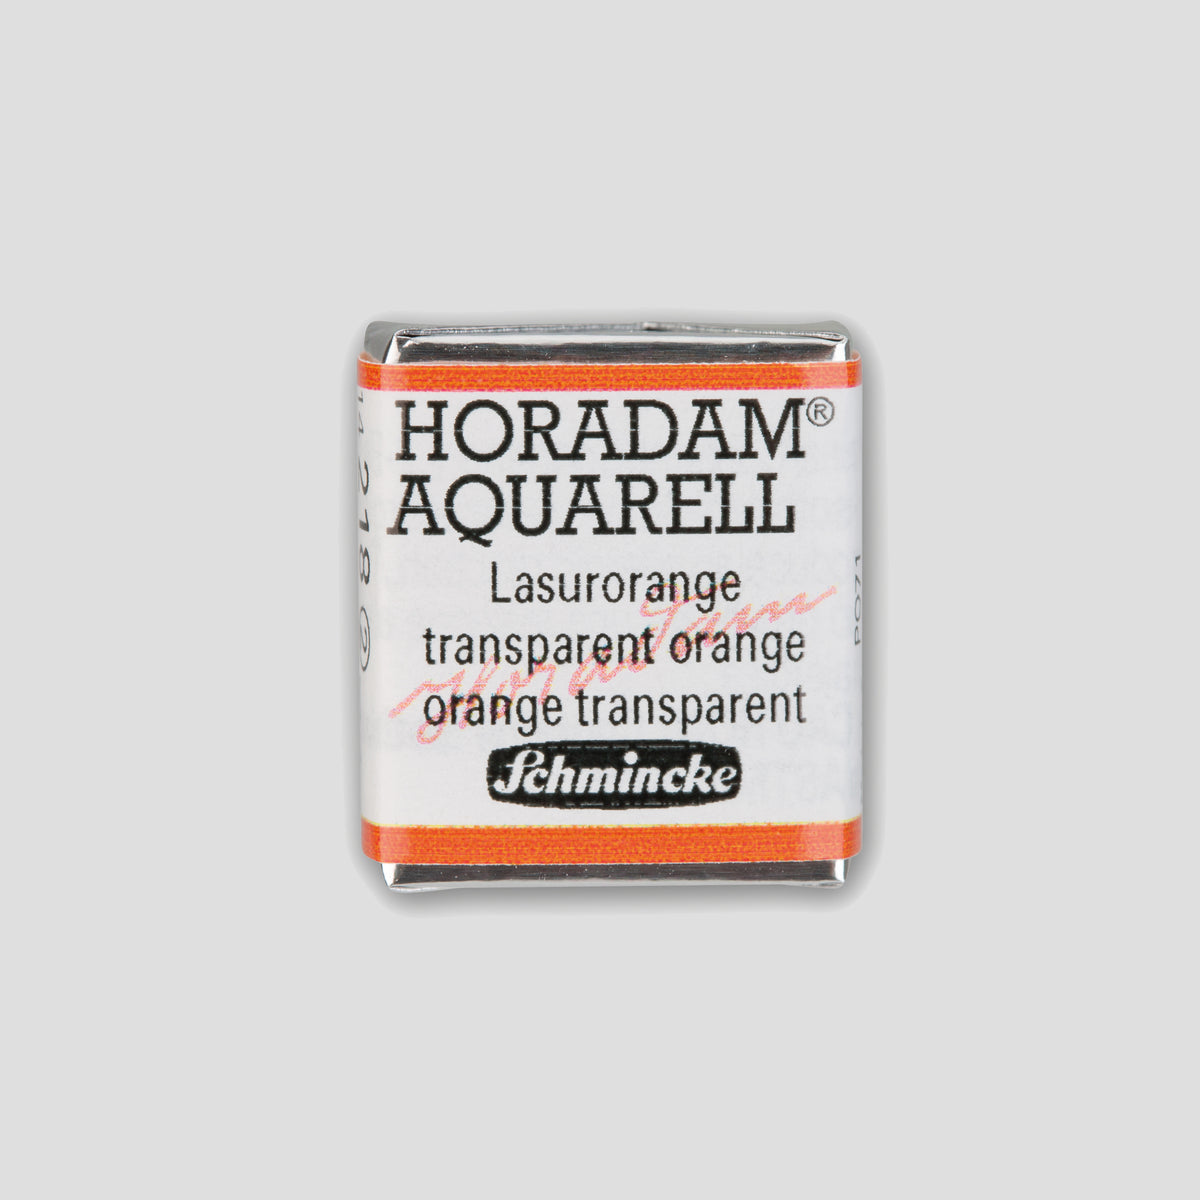 Schmincke Horadam® Halbpfanne transparent orange